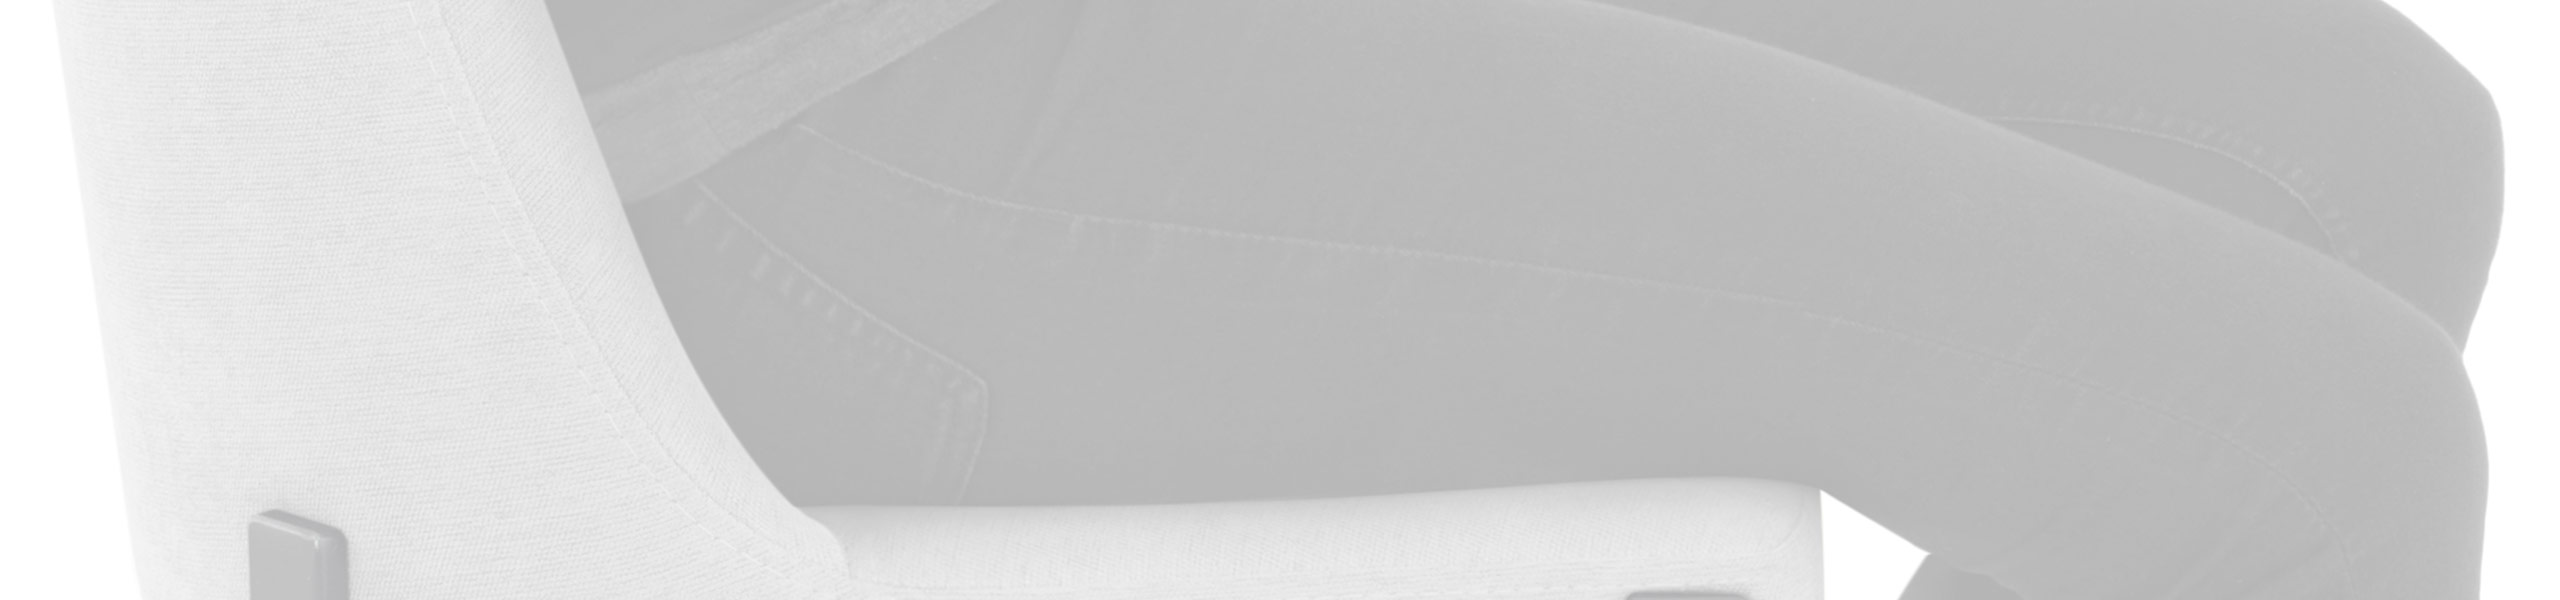 Aspen Bar Stool Grey Fabric Review Banner